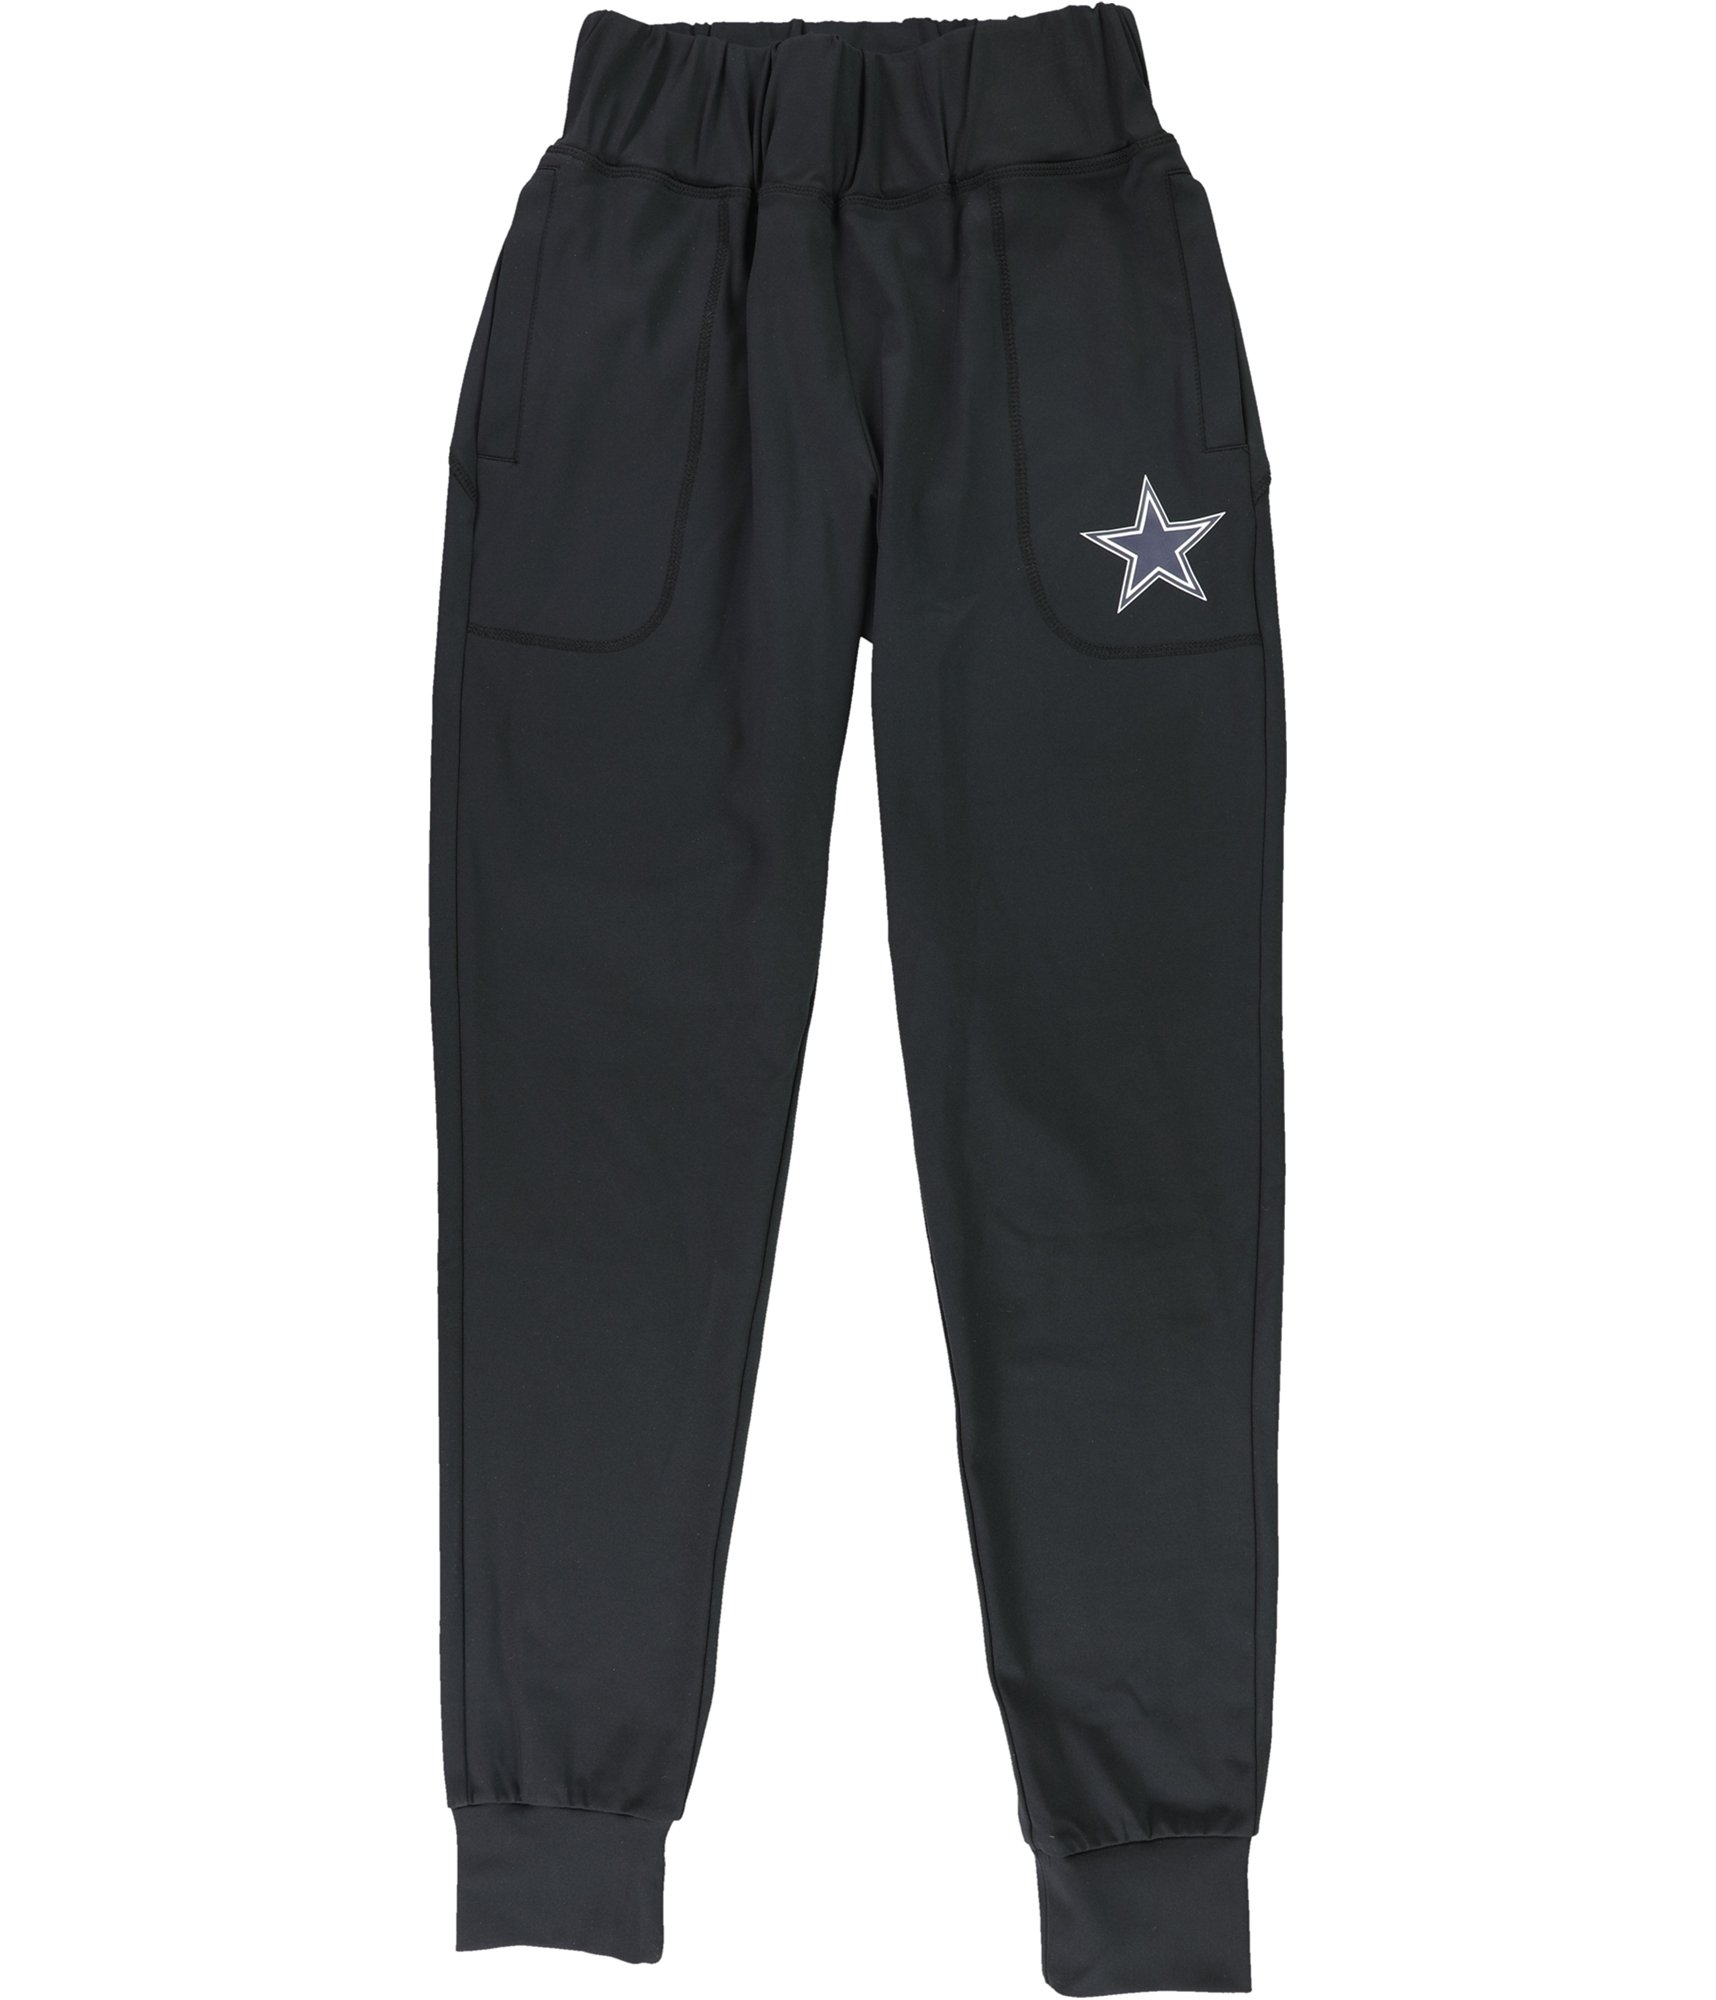 Buy a Tommy Hilfiger Womens Dallas Cowboys Athletic Jogger Pants